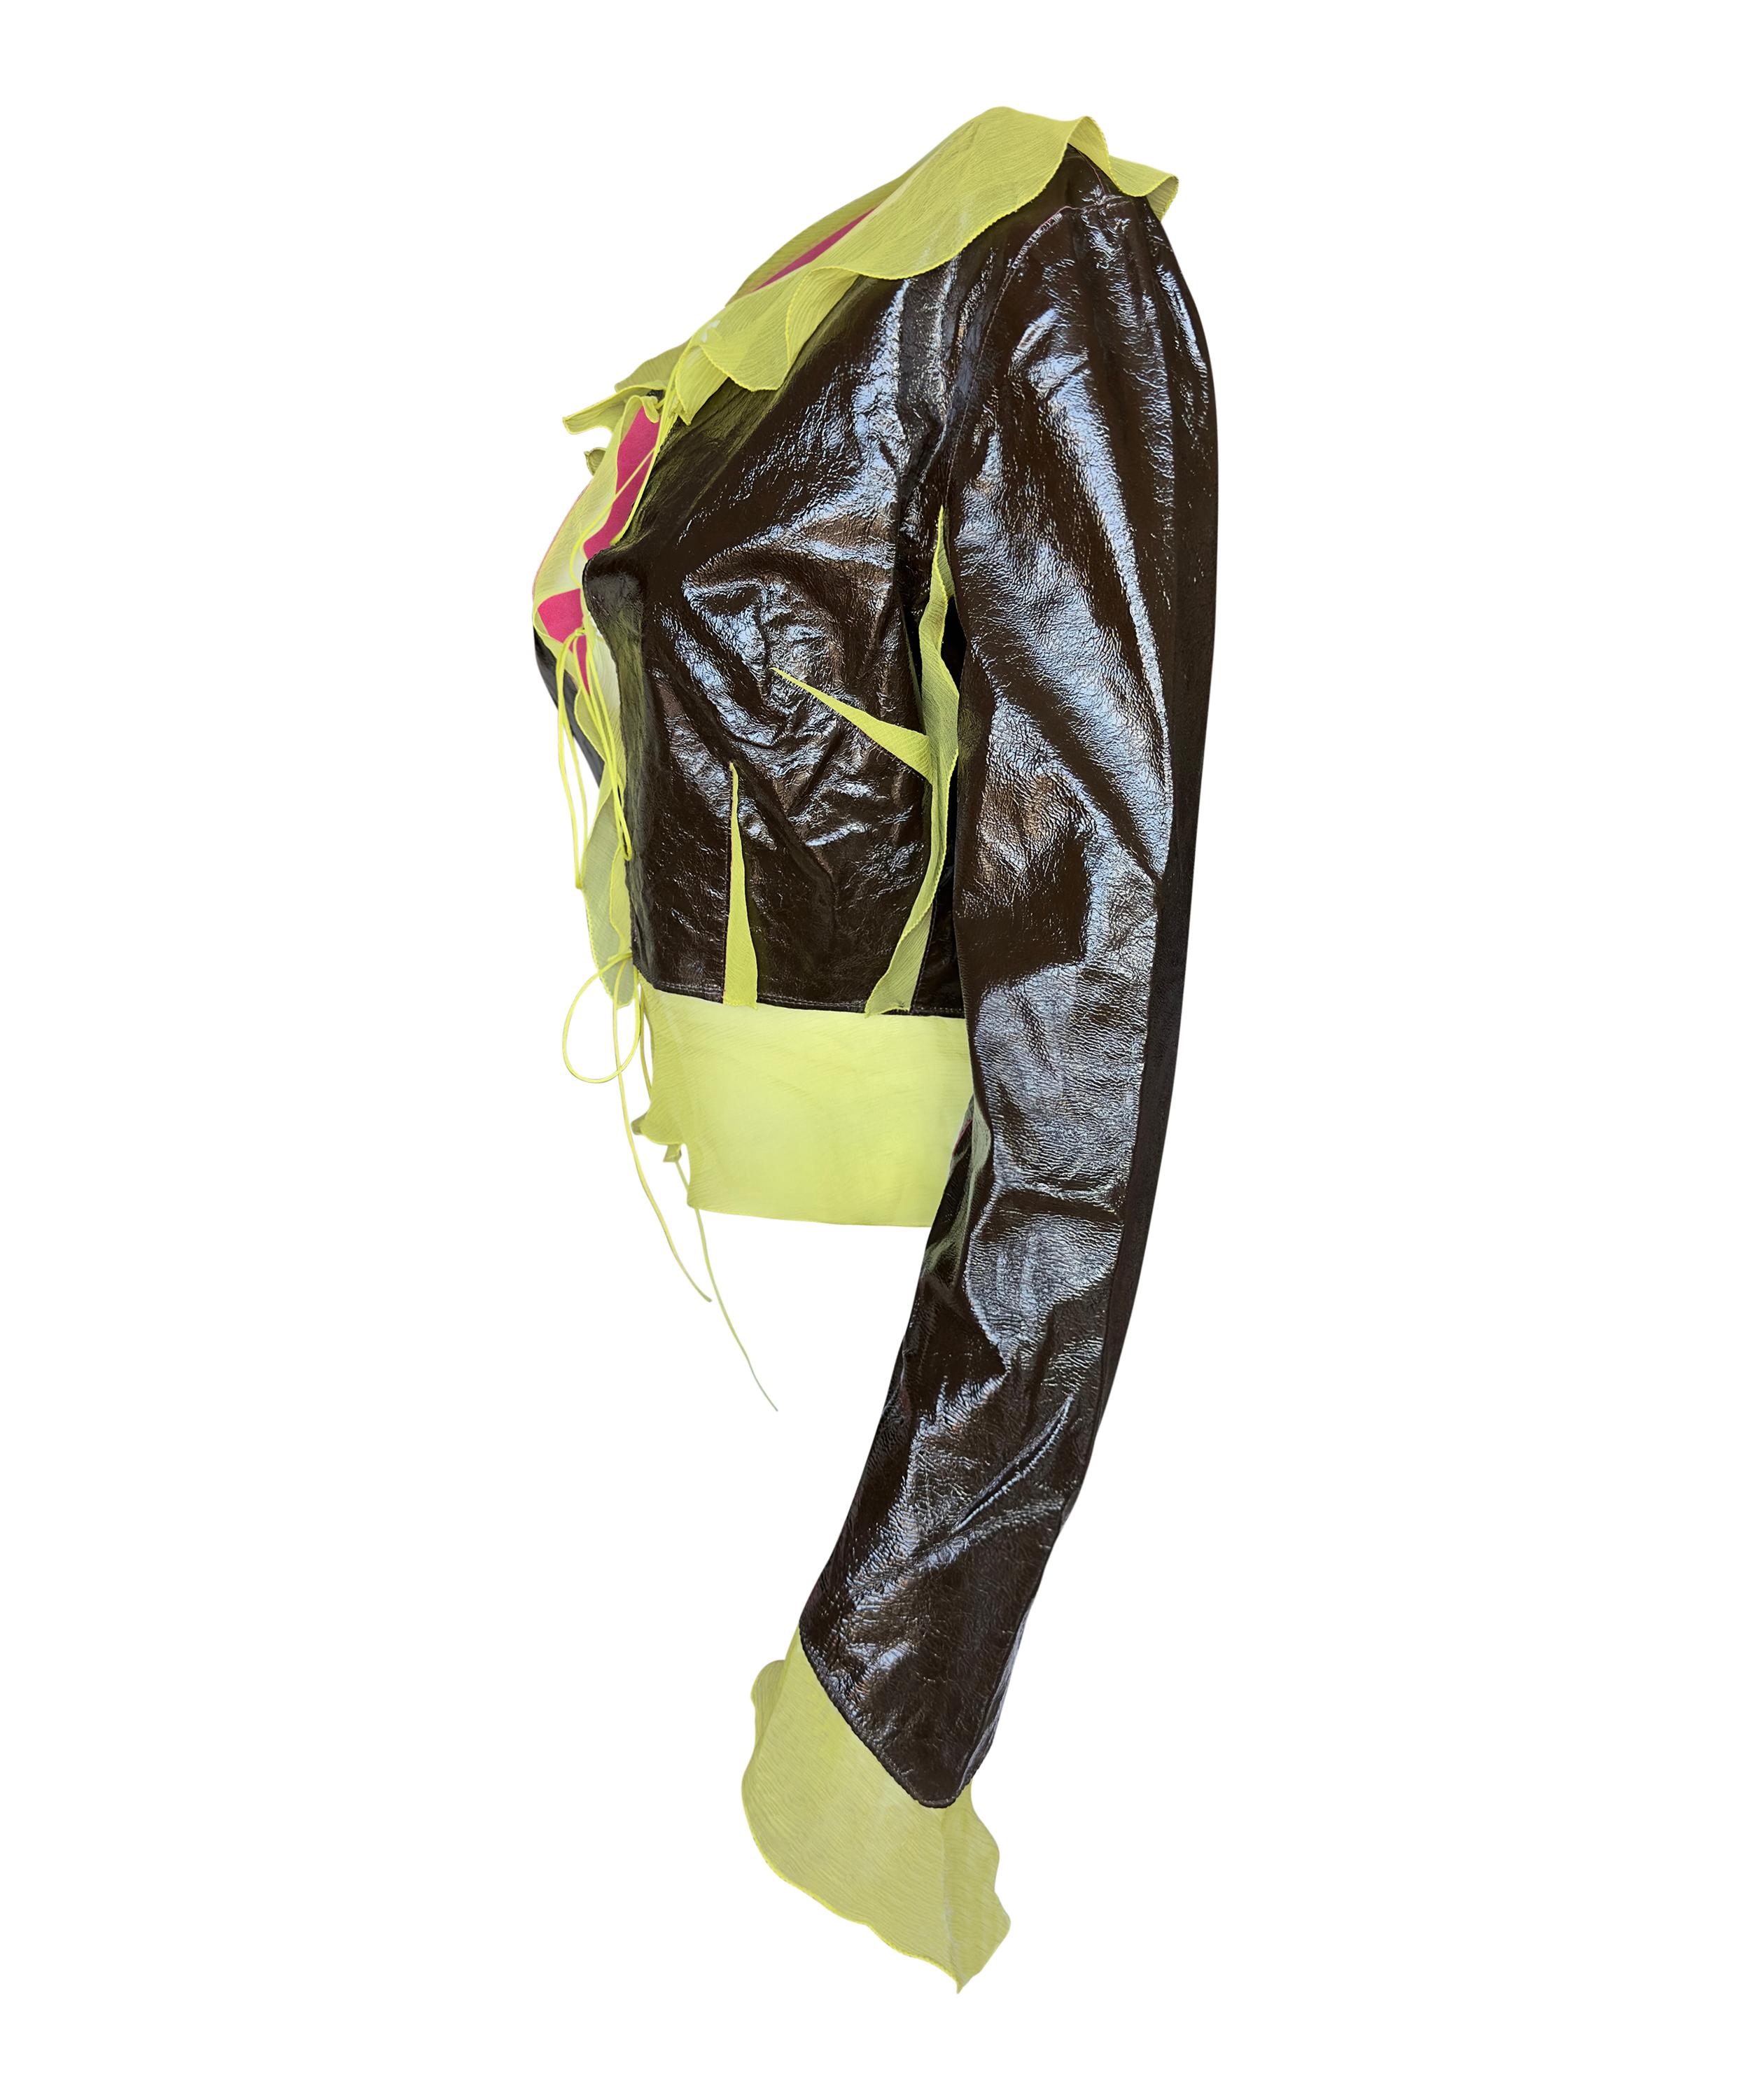 Women's S/S 2000 Fendi by Karl Lagerfeld A Patent Leather Lime Silk Chiffon Jacket